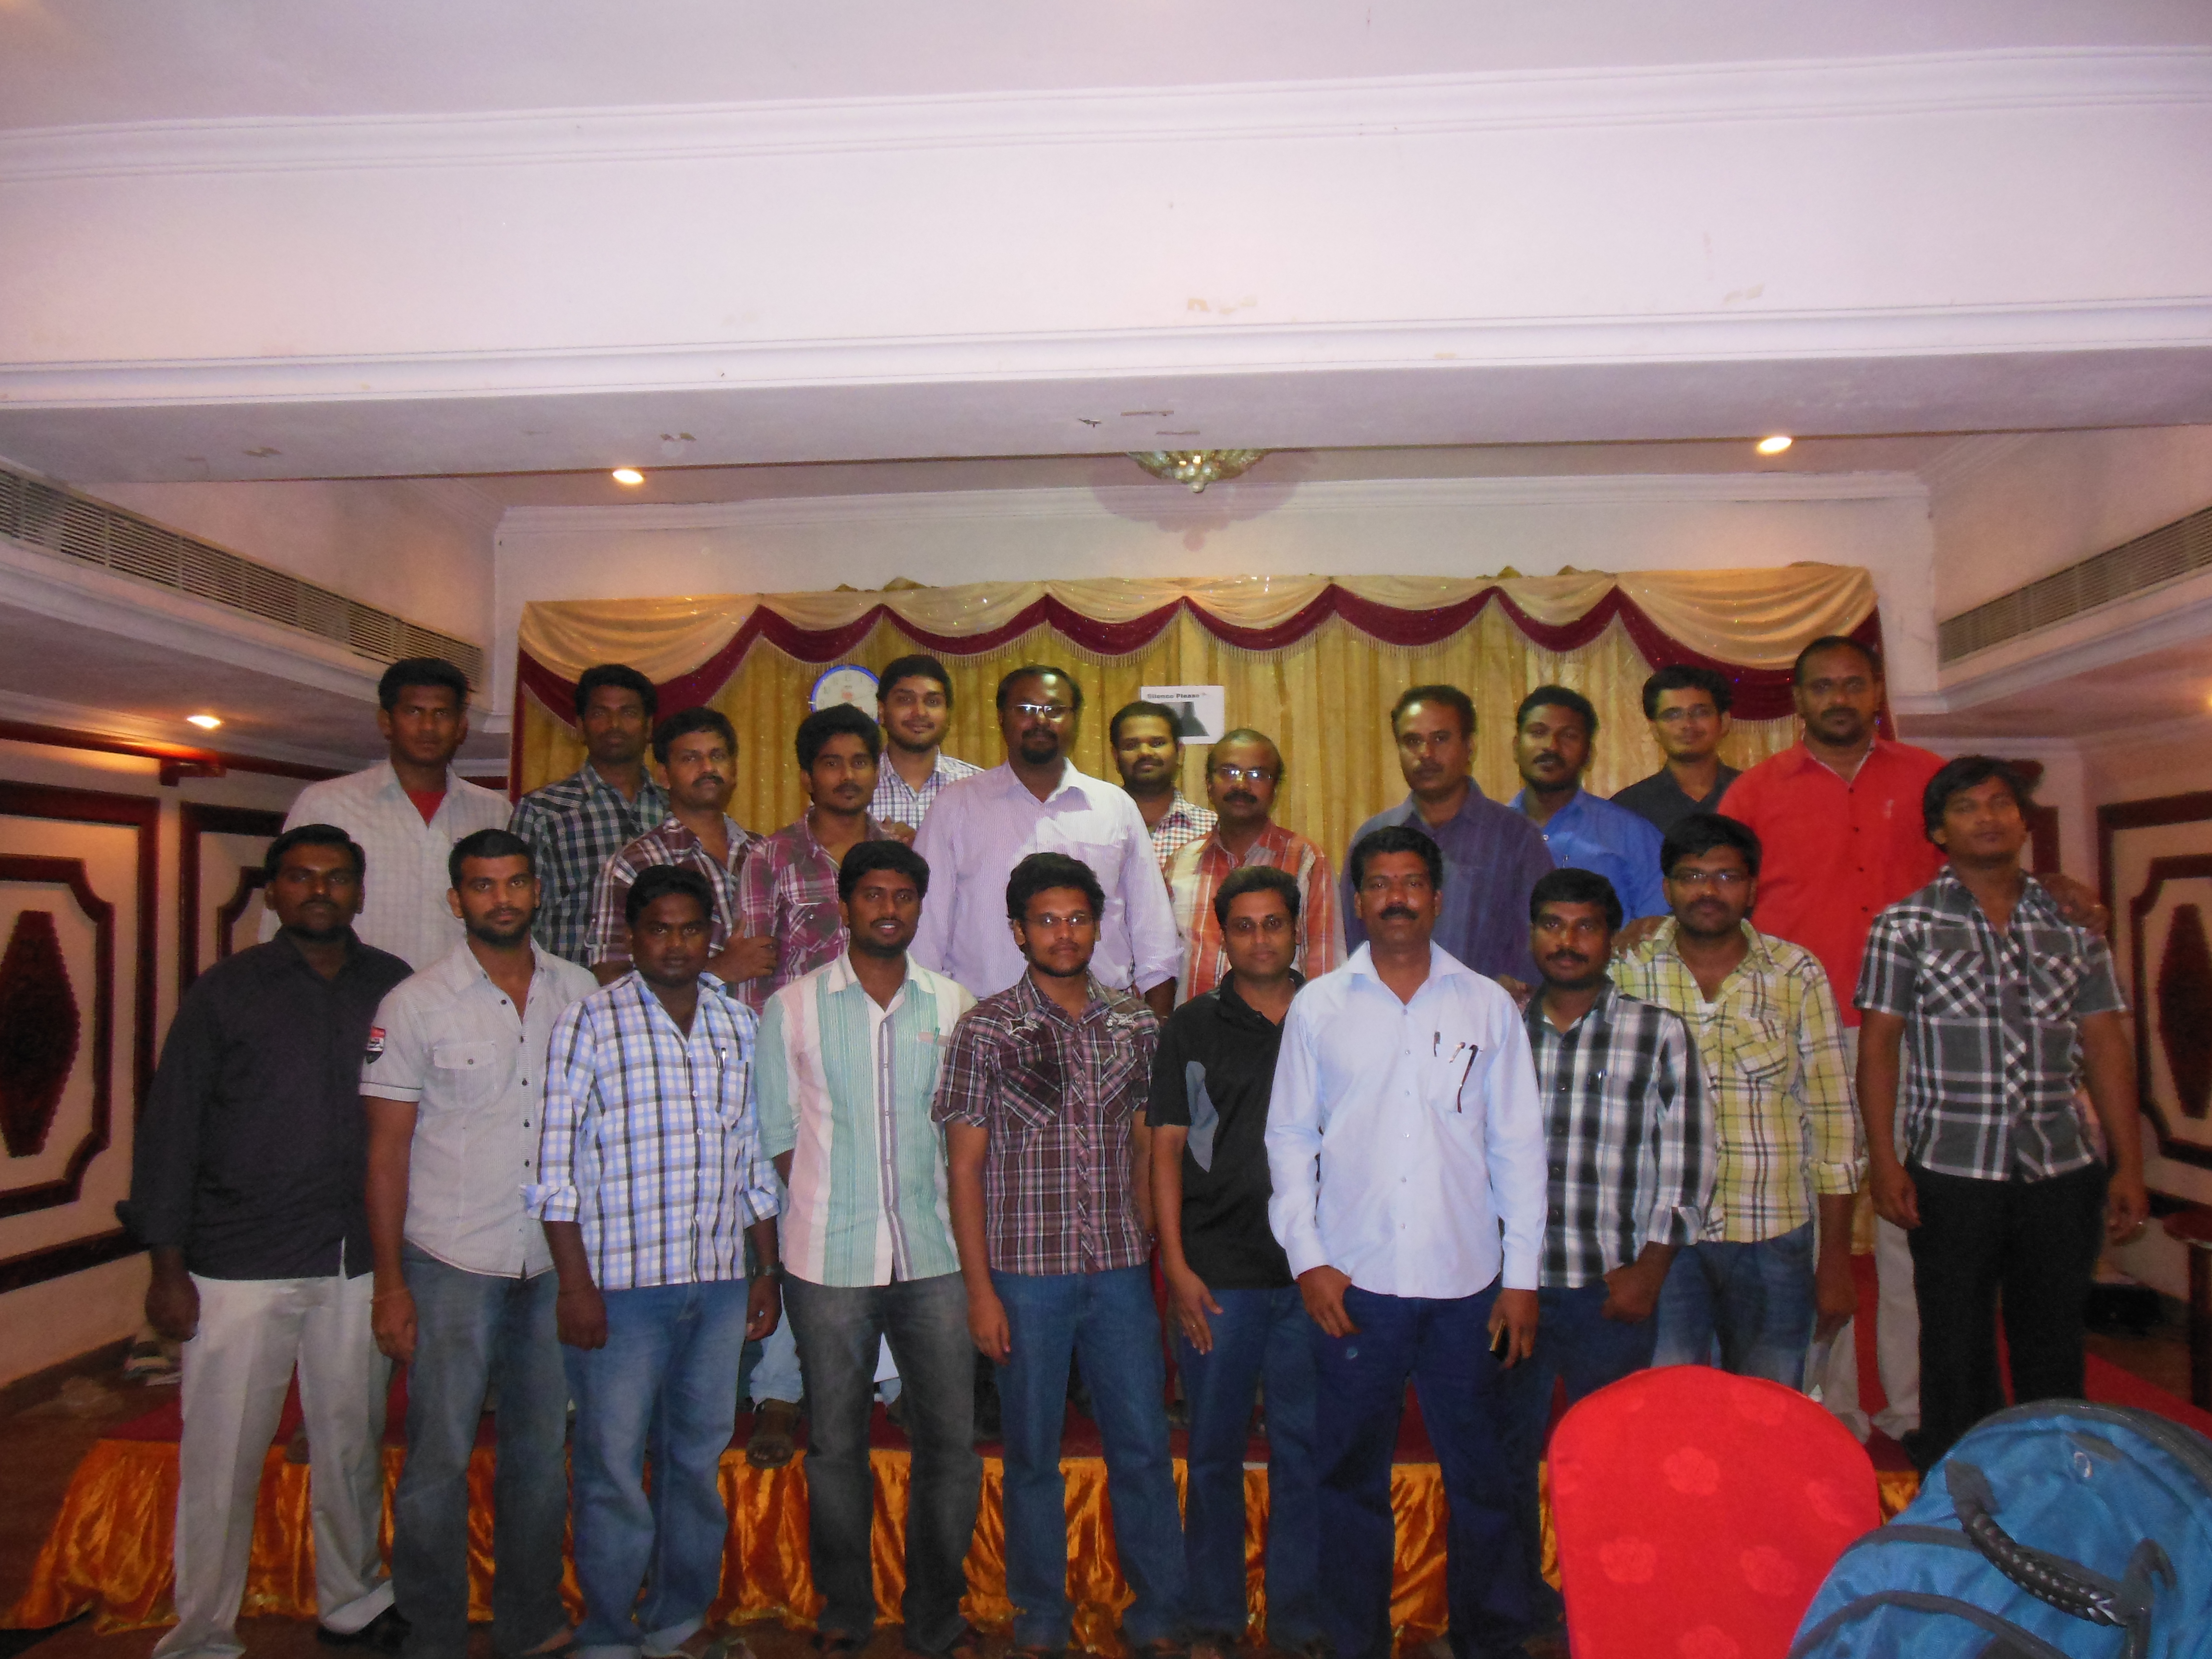 Nebosh course in Chennai